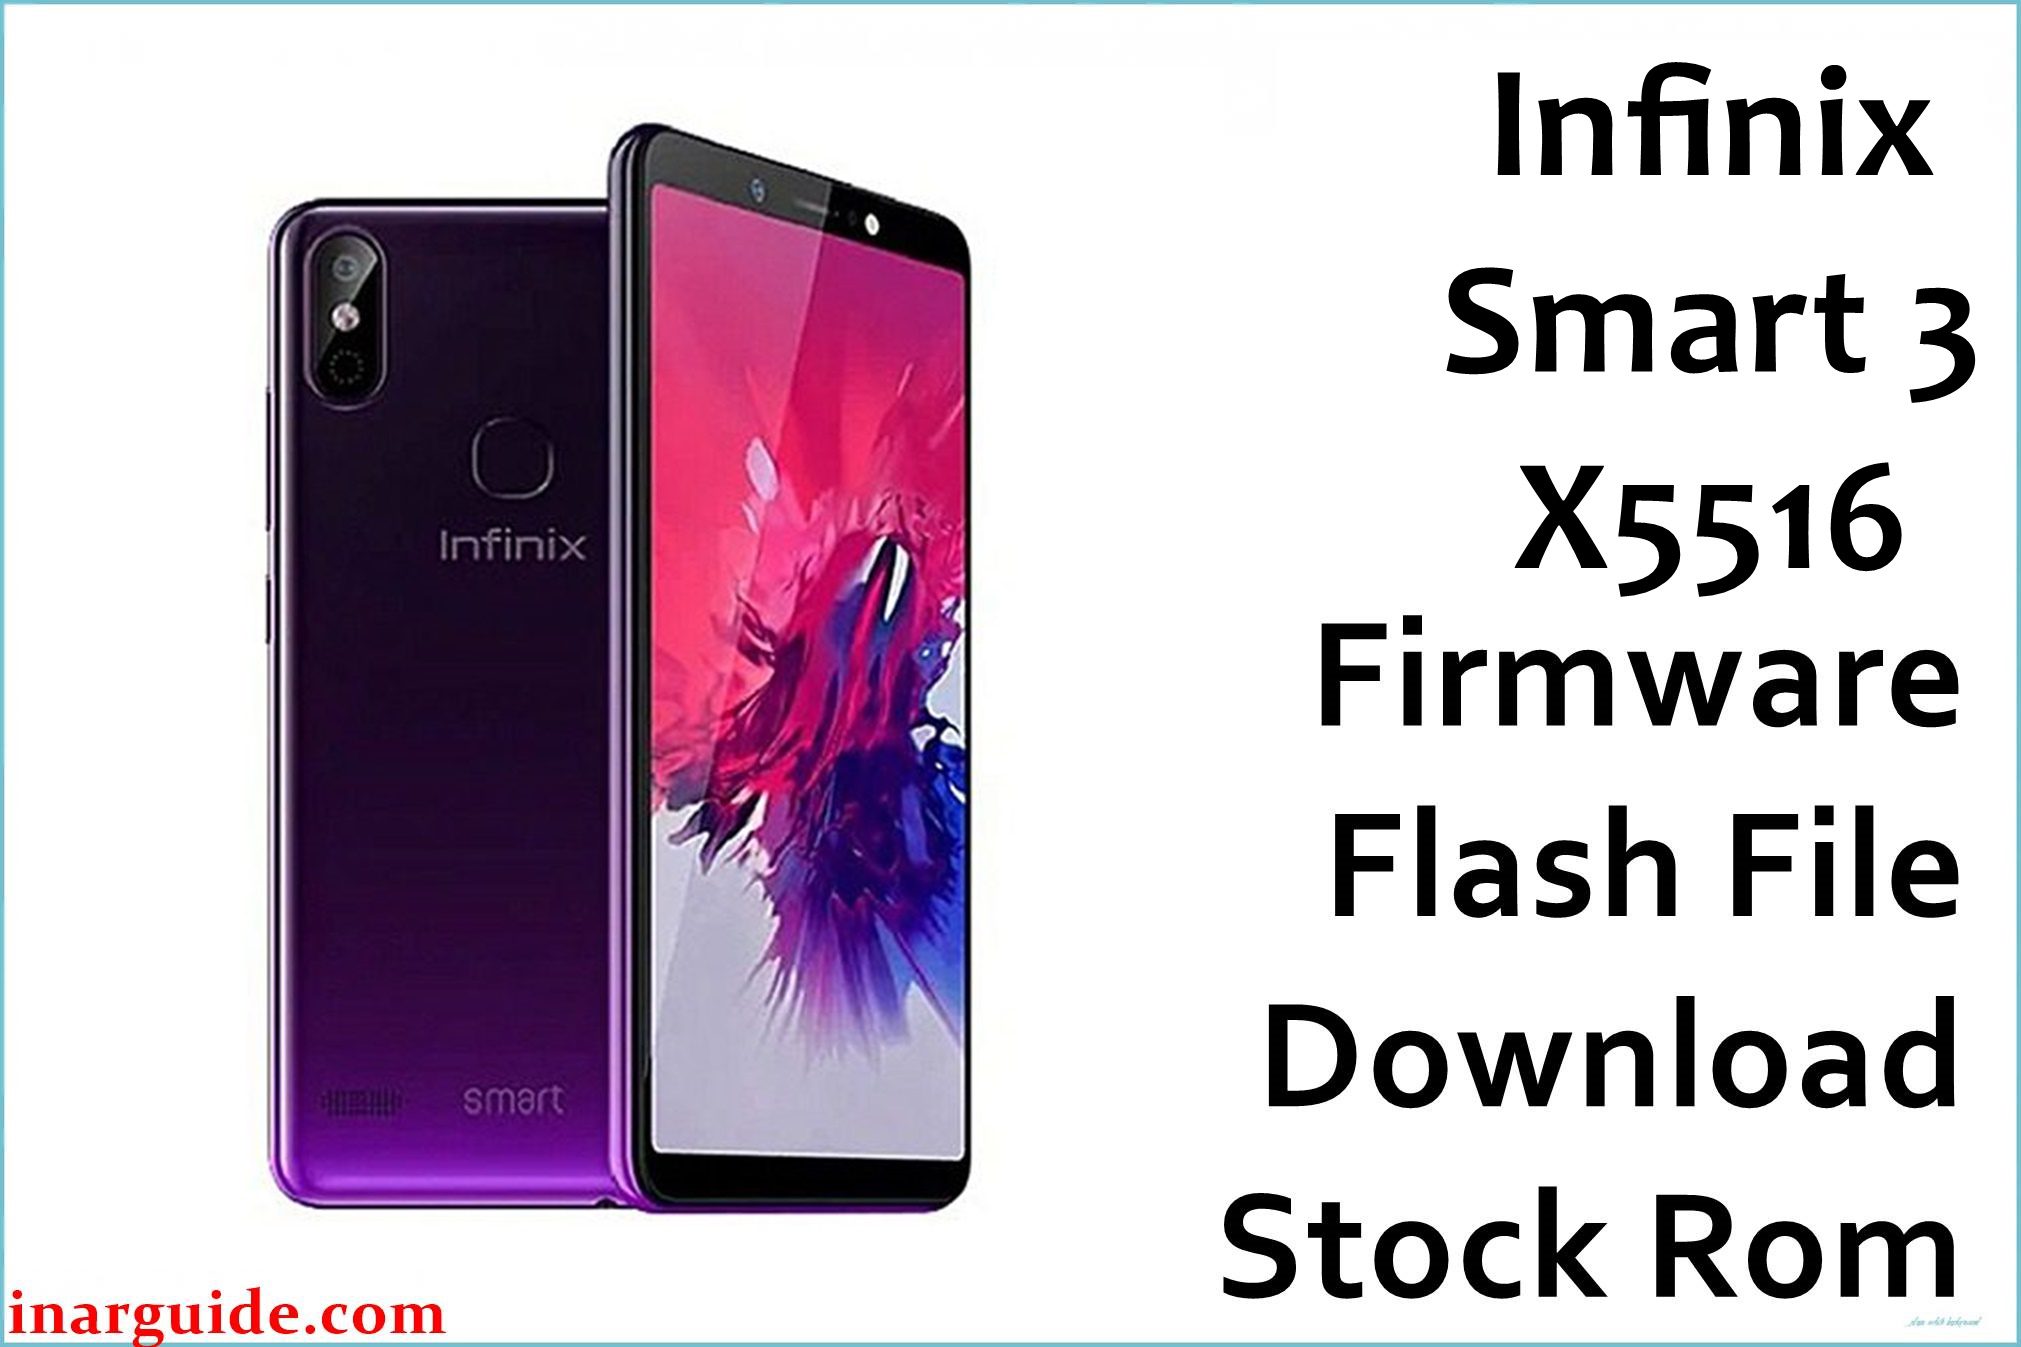 Infinix Smart 3 X5516